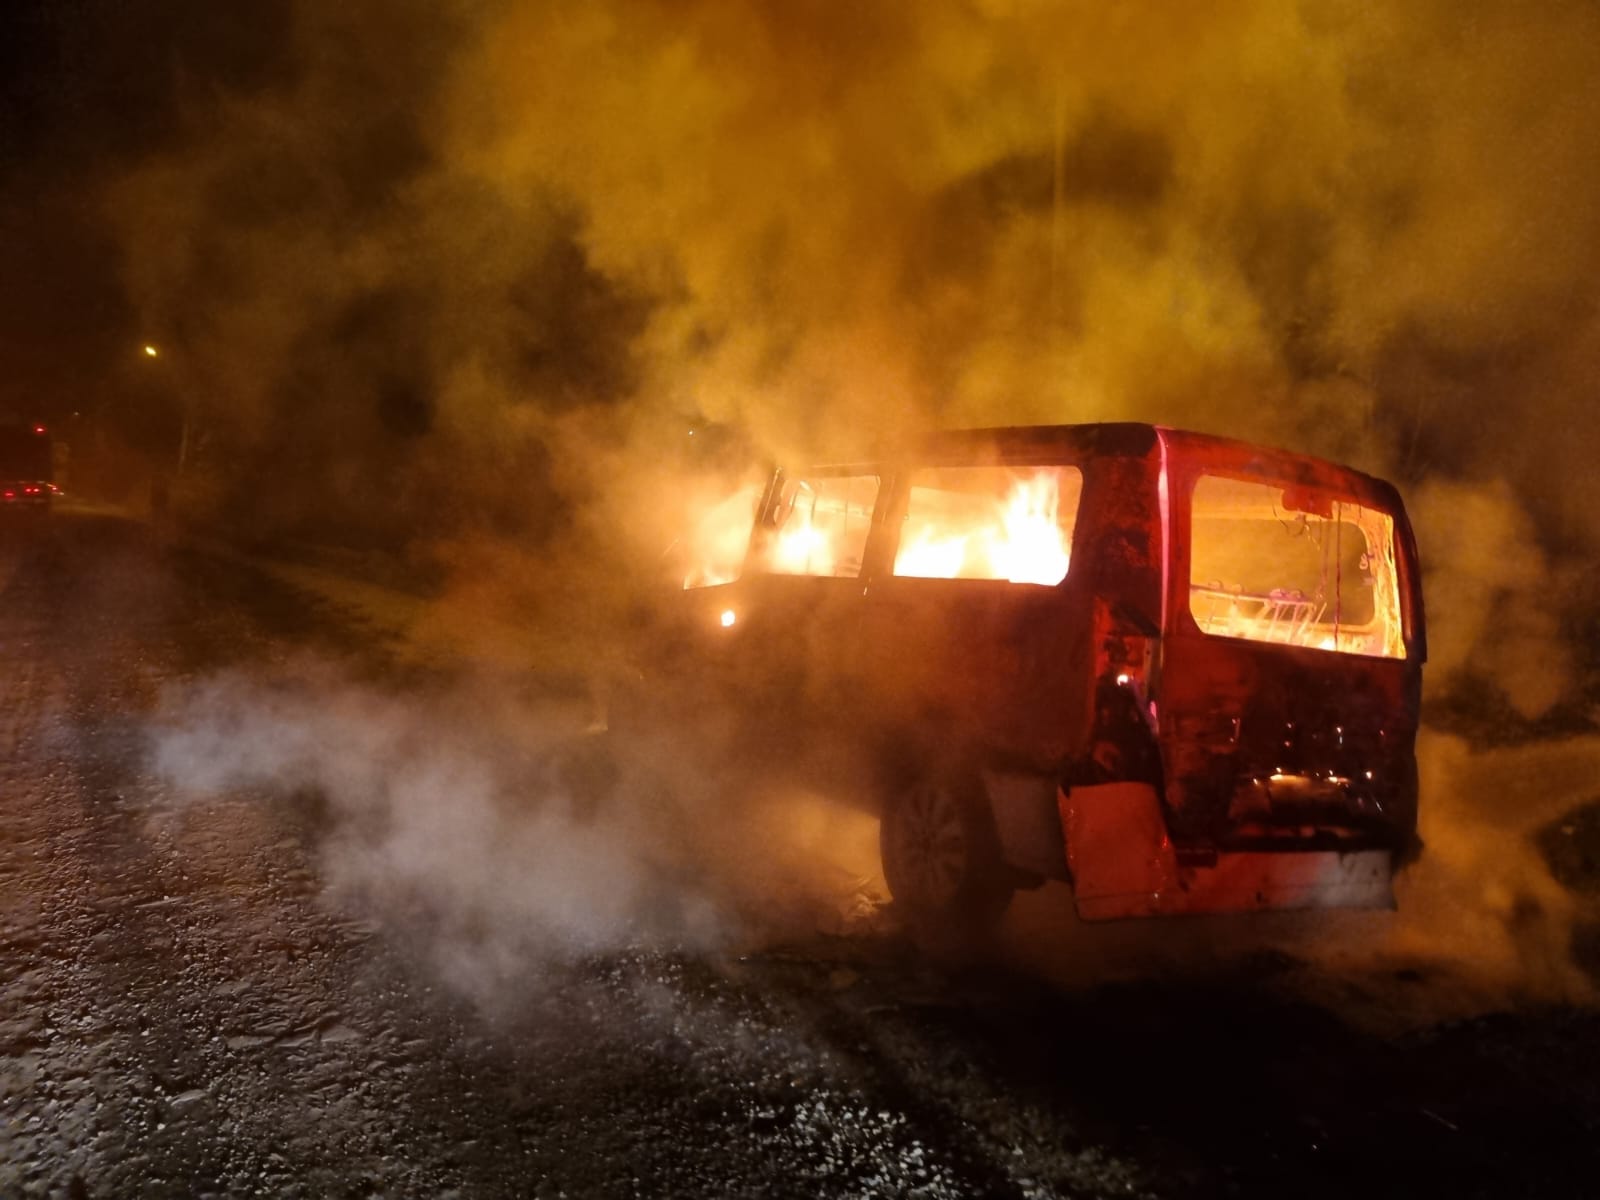 FOTOS: Van fica destruída após pegar fogo, em Salete